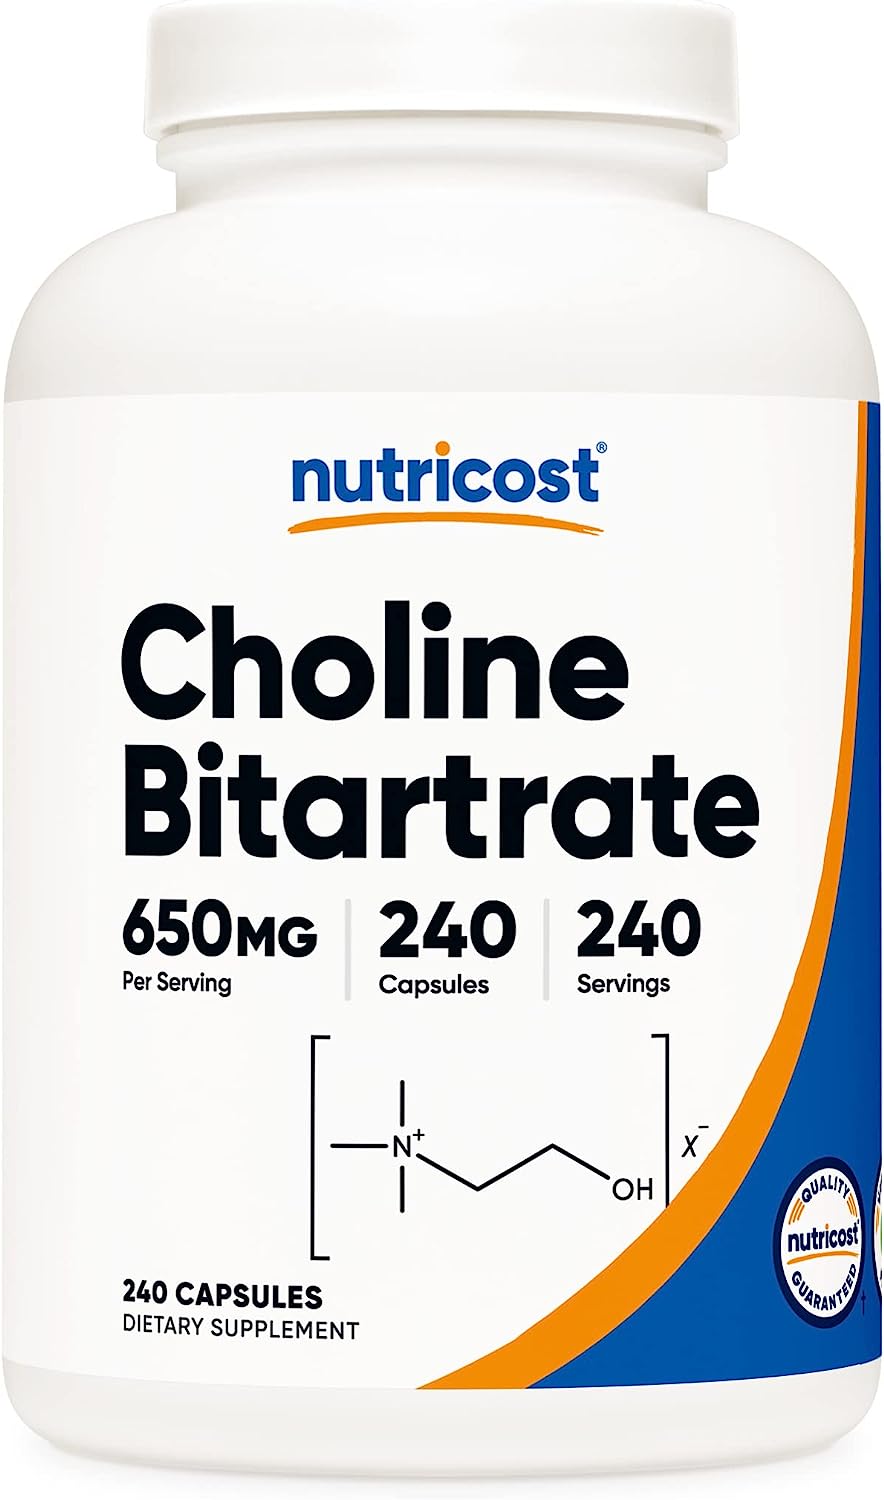 Nutricost Choline Bitartrate 650mg, 240 Vegetarian Capsules - Non-GMO, Vegetarian Friendly, Gluten Free